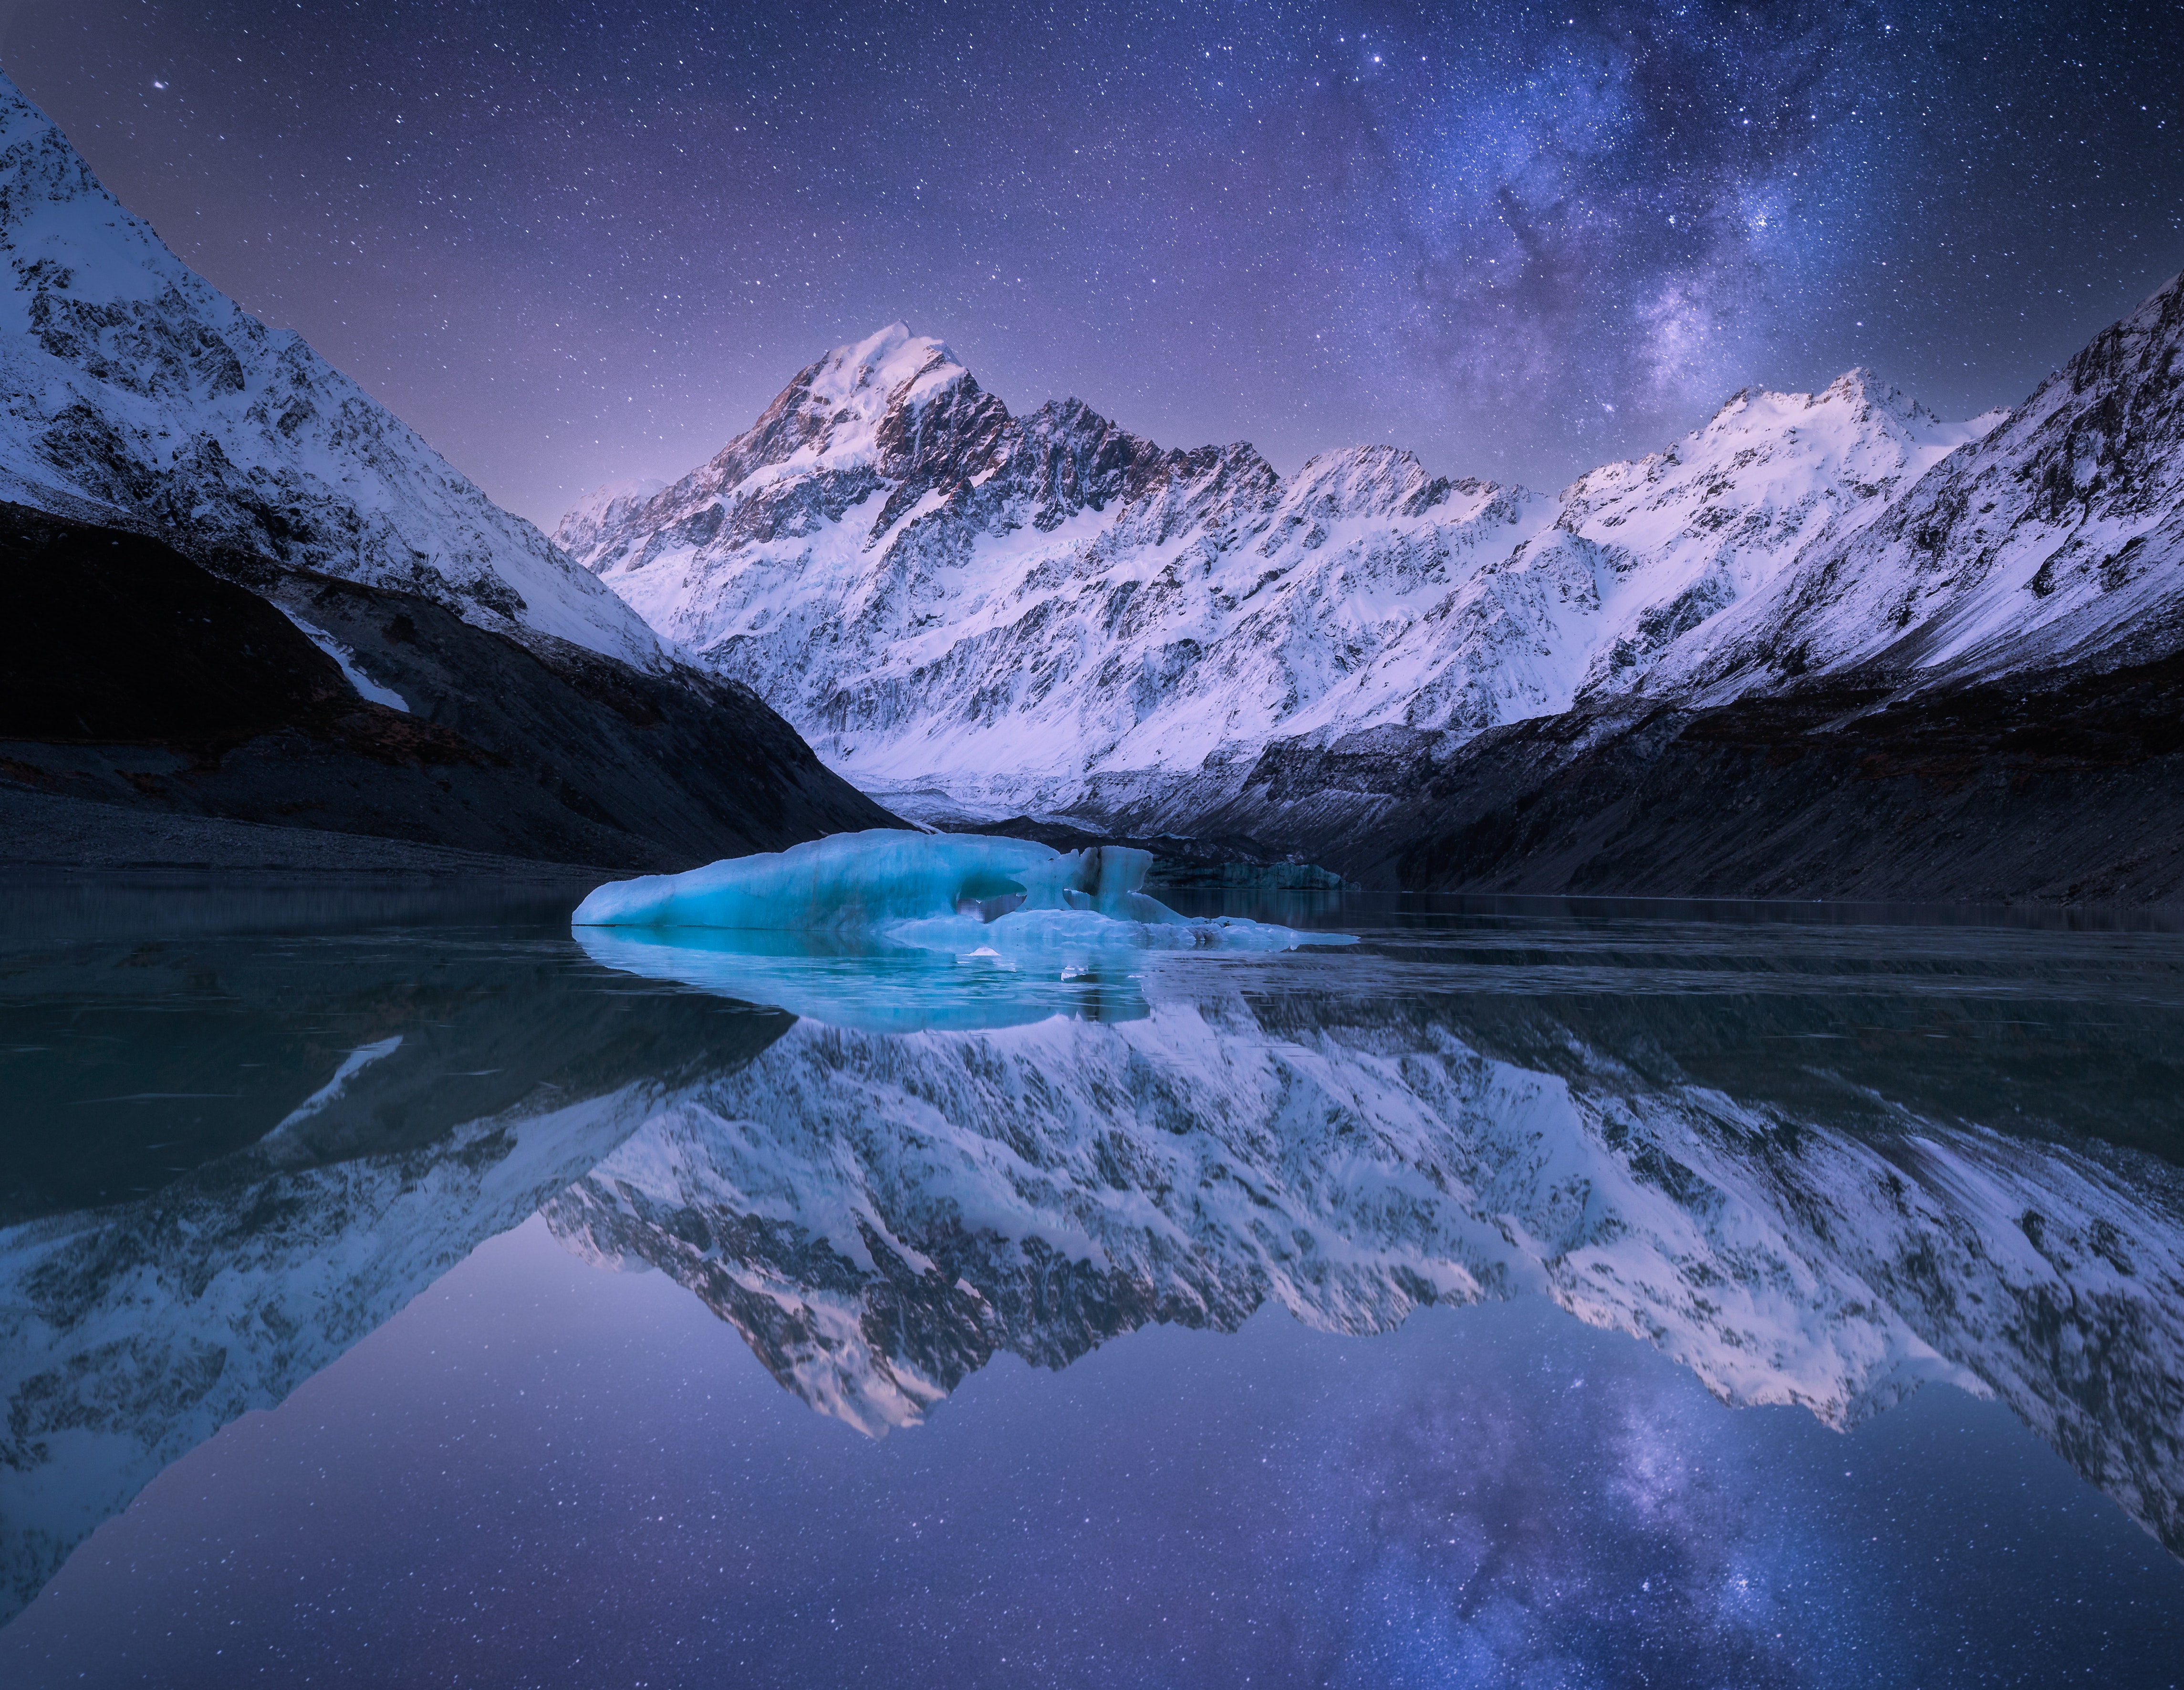 Landscape Nature Photography Mountains Sky Night Nightscape Galaxy Stars Reflection Snow New Zealand 4578x3543